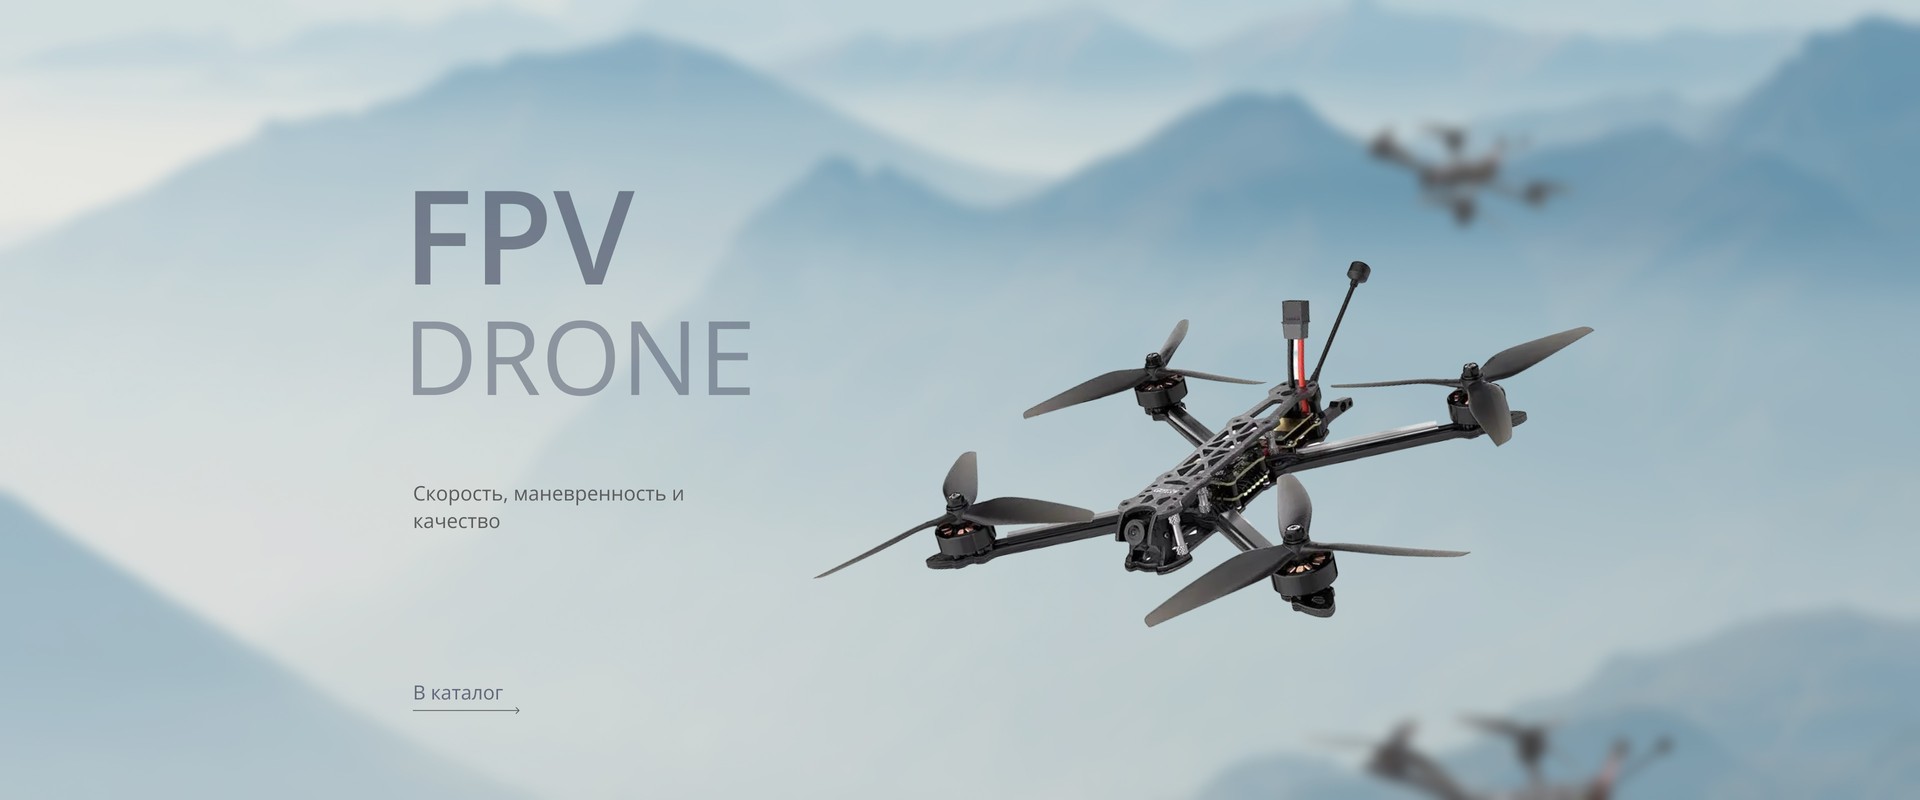 интернет-магазин Quadcopters купить FPV дрон